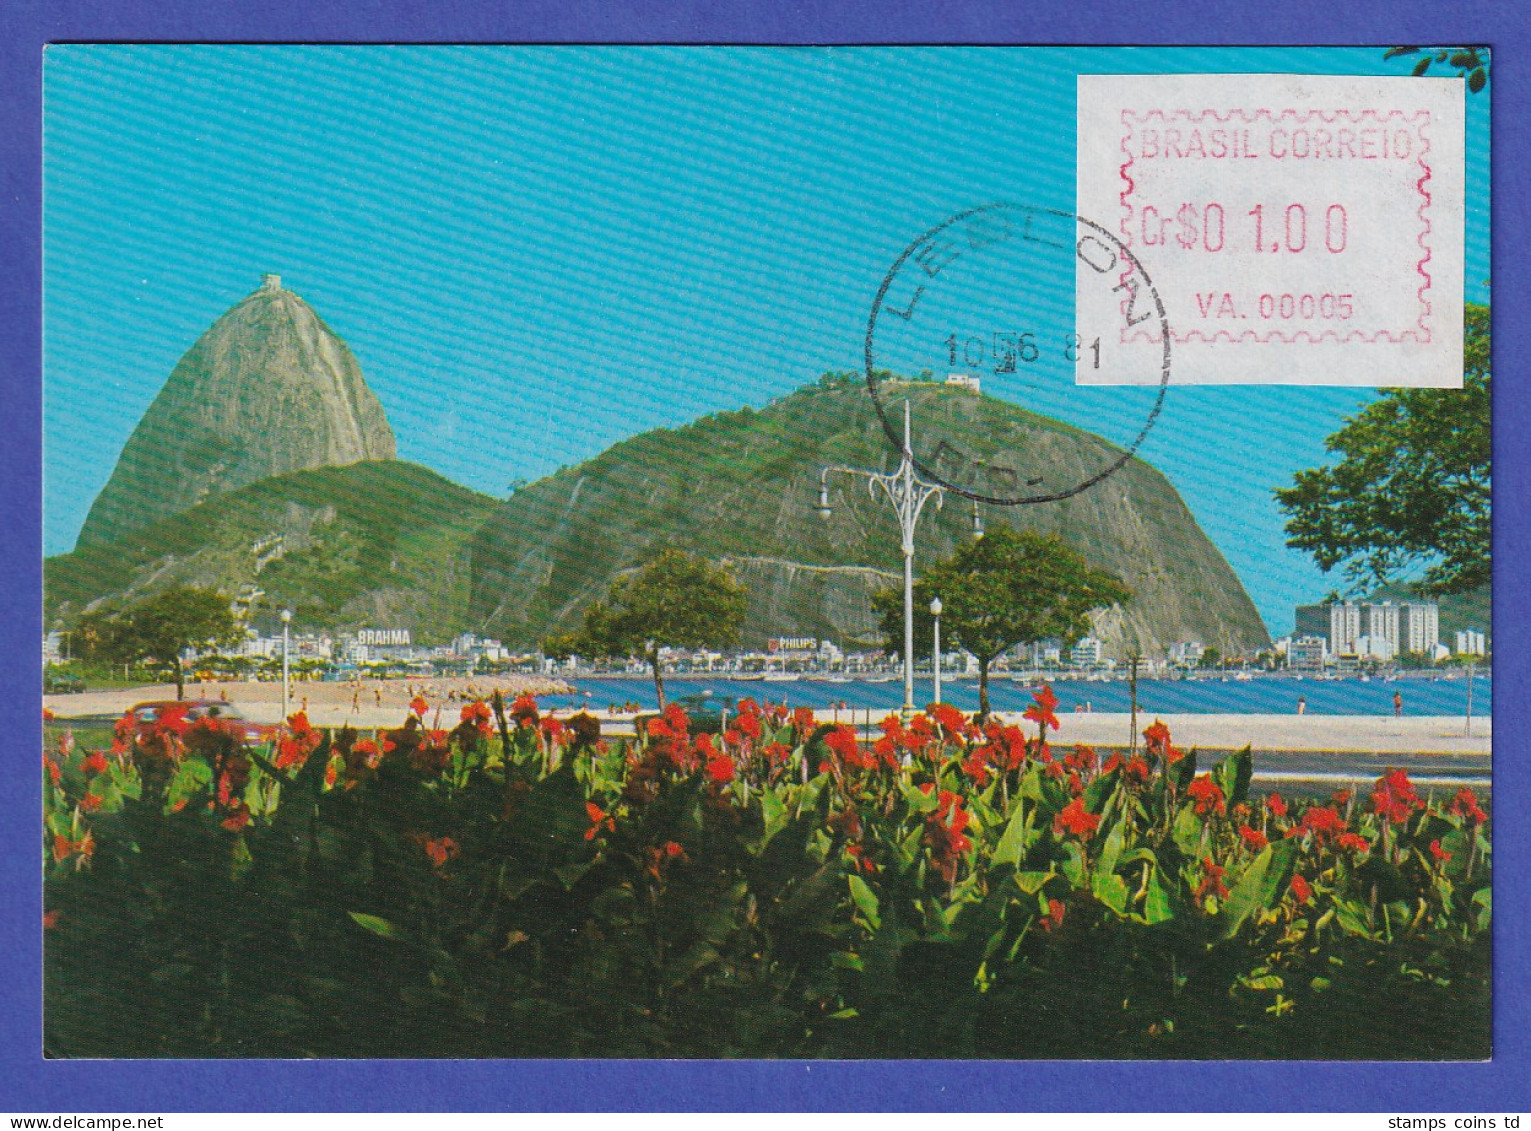 Brasilien Frama-ATM AG.00006 Und VA.00005 LEBLON Auf Ansichtskarte, O 10.06.81 - Franking Labels